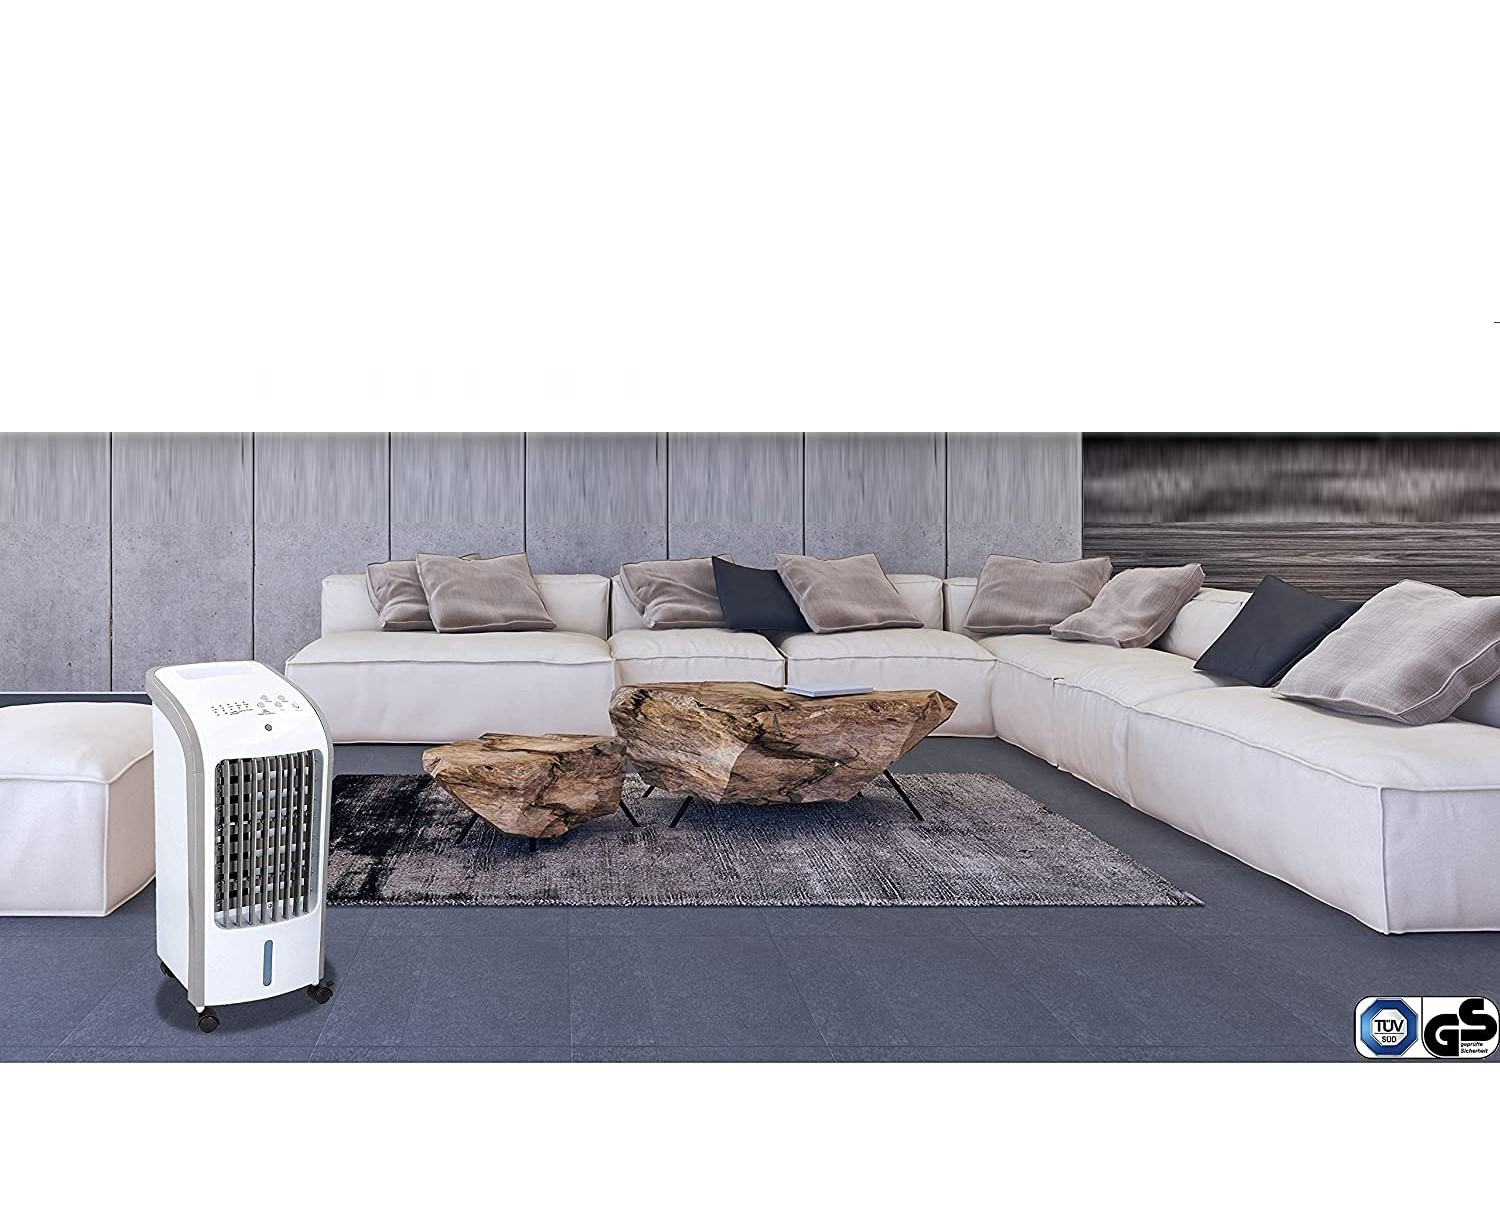 m², Klimagerät Aircooler (Max. 35 EEK: Raumgröße: A+) SENA weiß MESKO